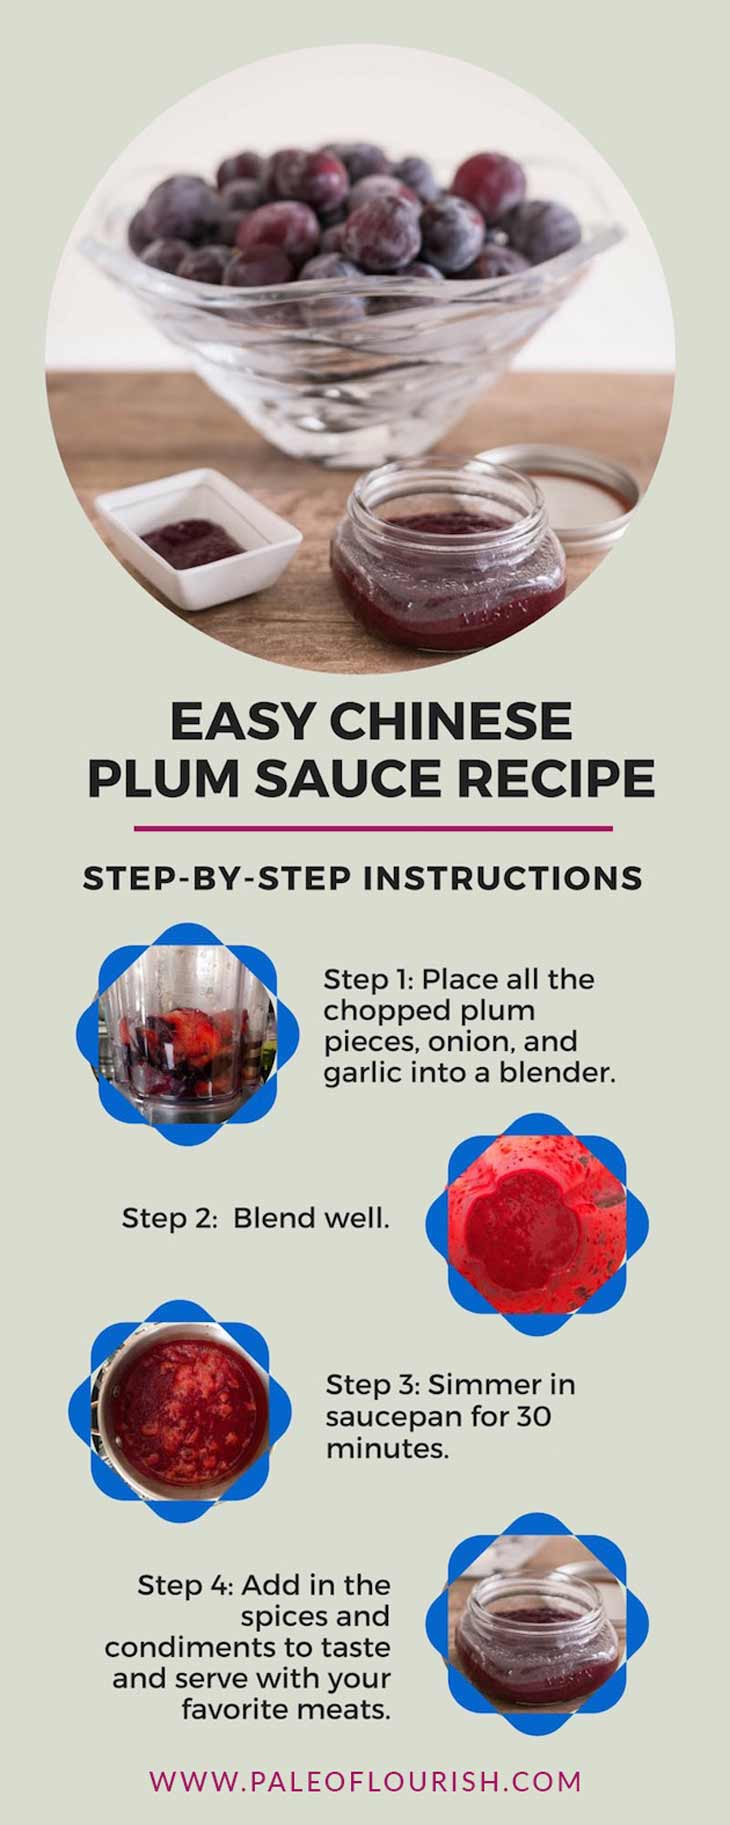 Easy Chinese Plum Sauce Recipe Infographic